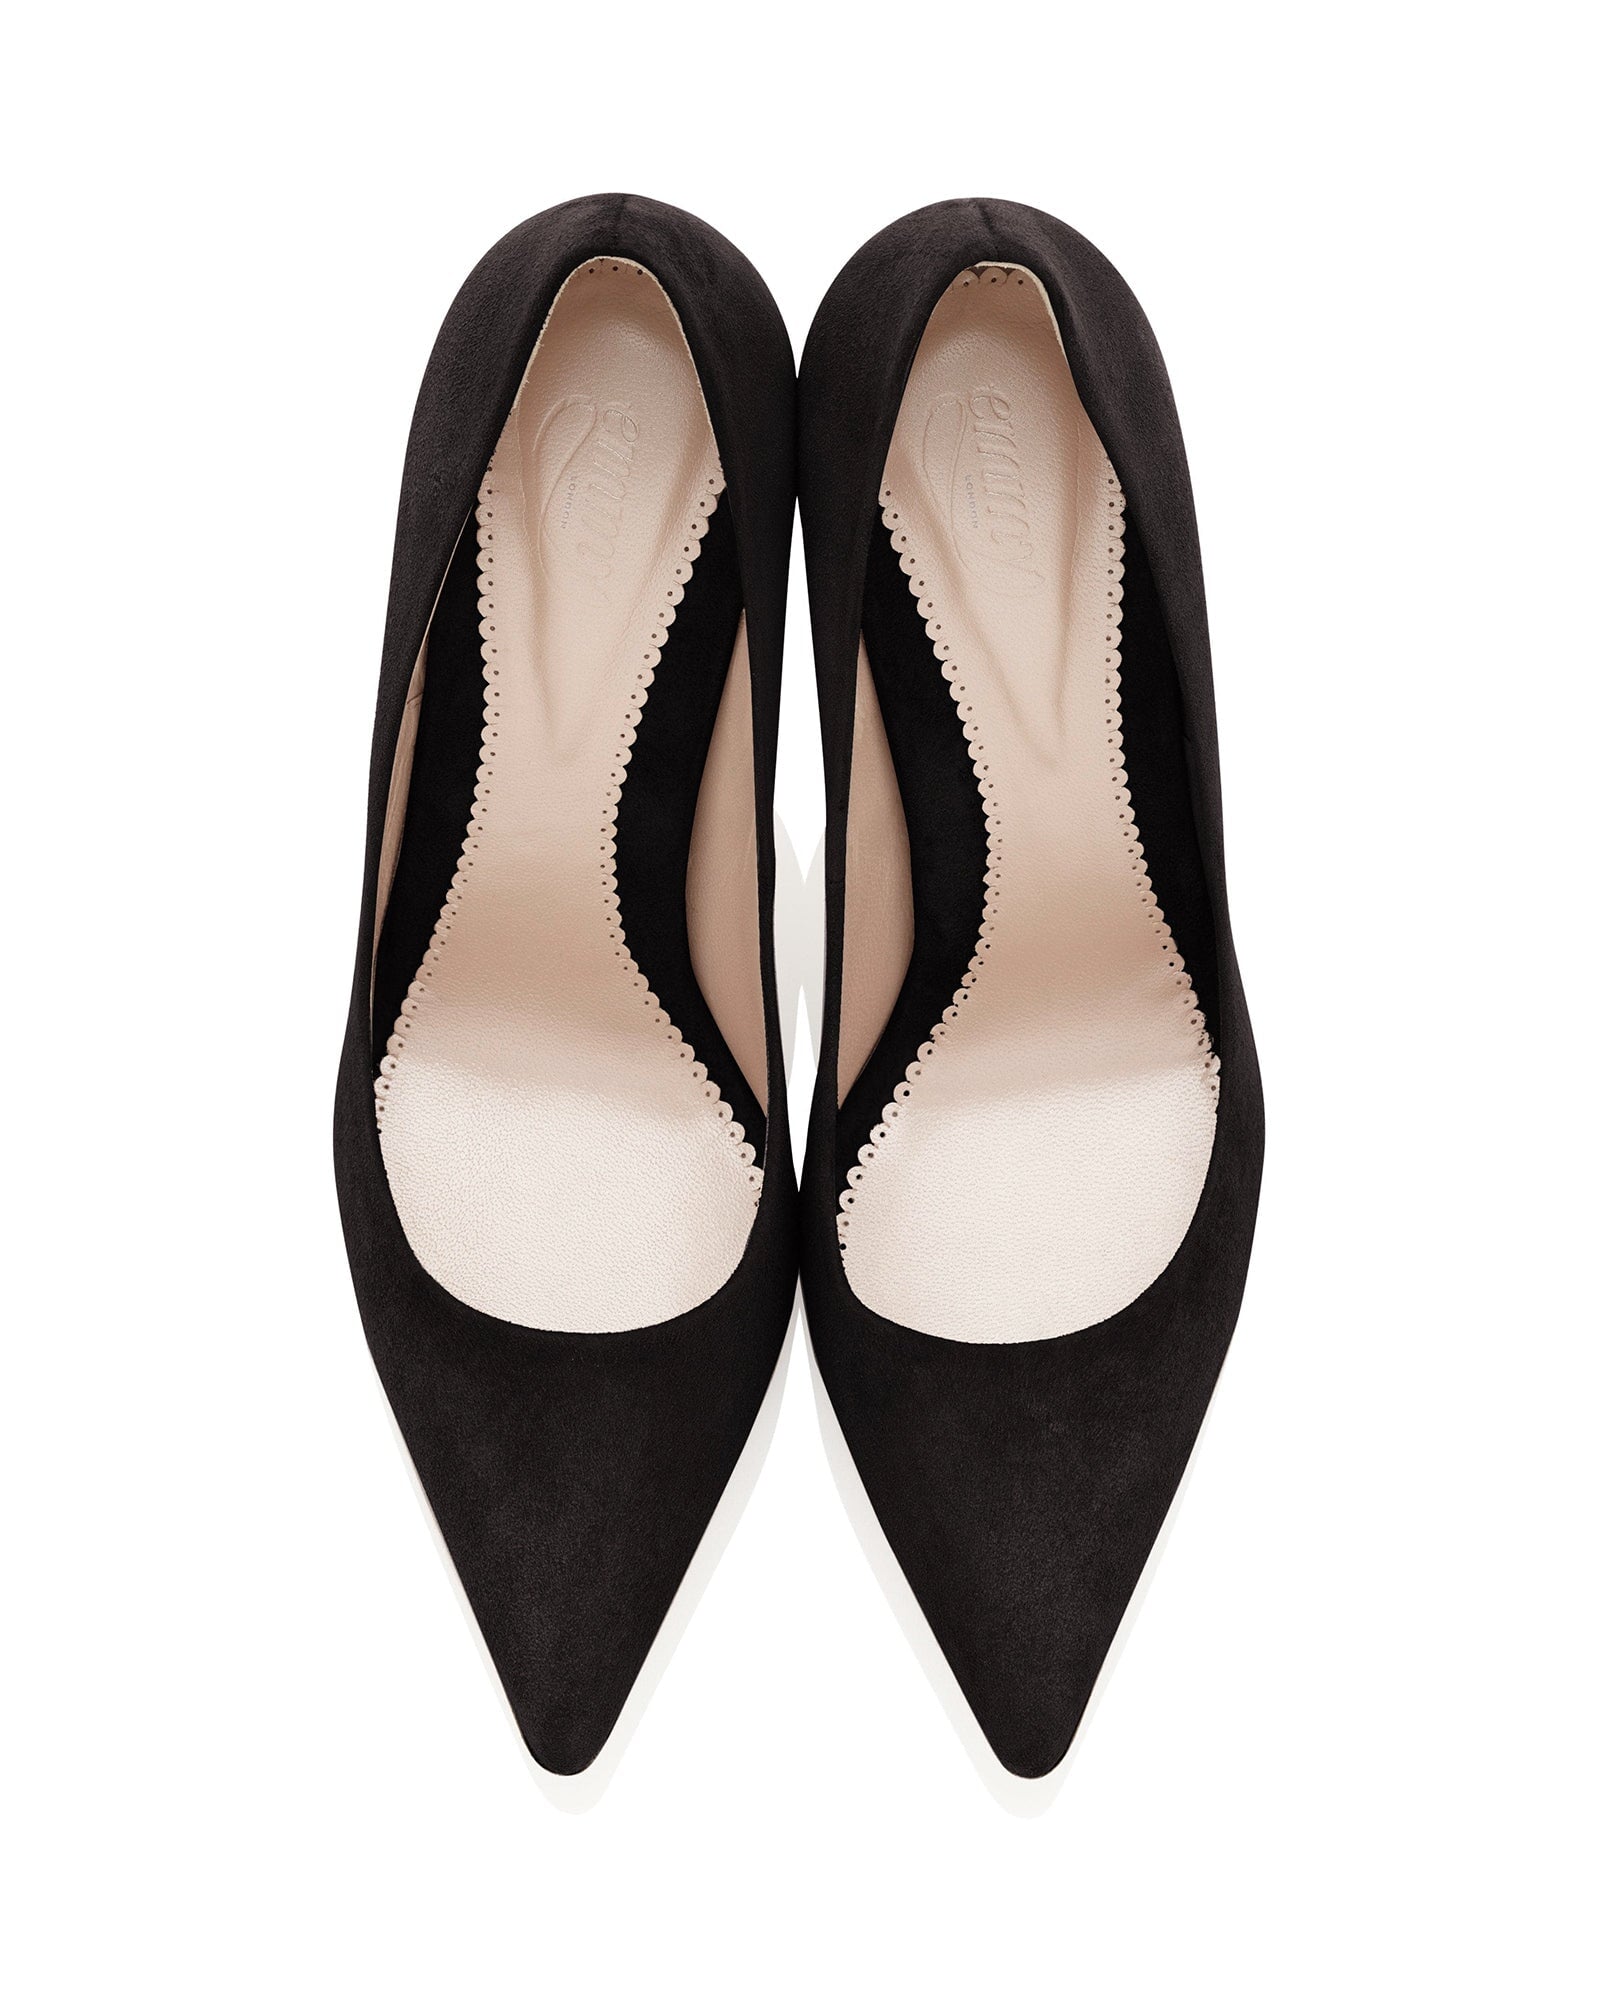 Rebecca Jet Black Fashion Shoe Black Pointed Court Shoe  image